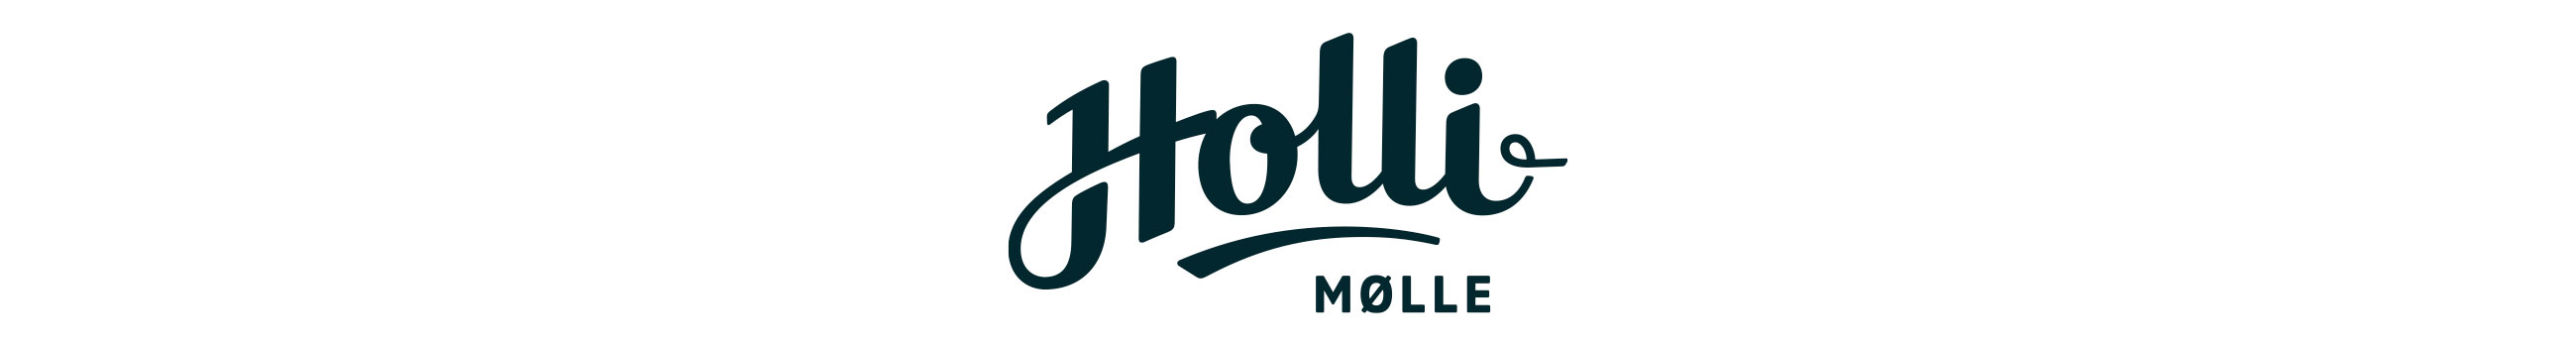 Holli Mølle logo. Visuell identitet visual identity.